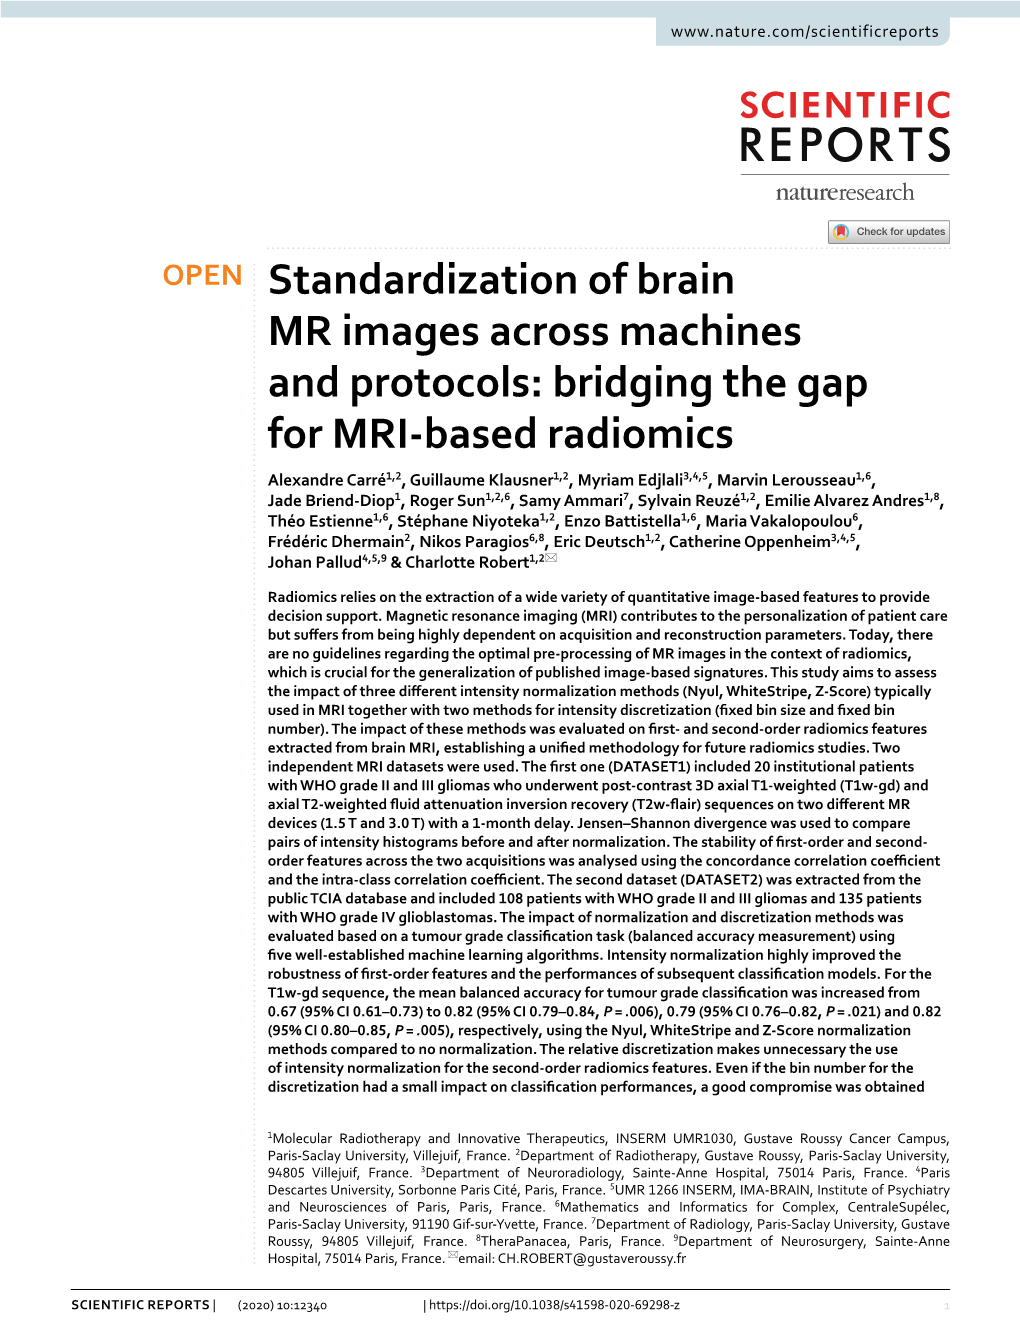 Bridging the Gap for MRI-Based Radiomics